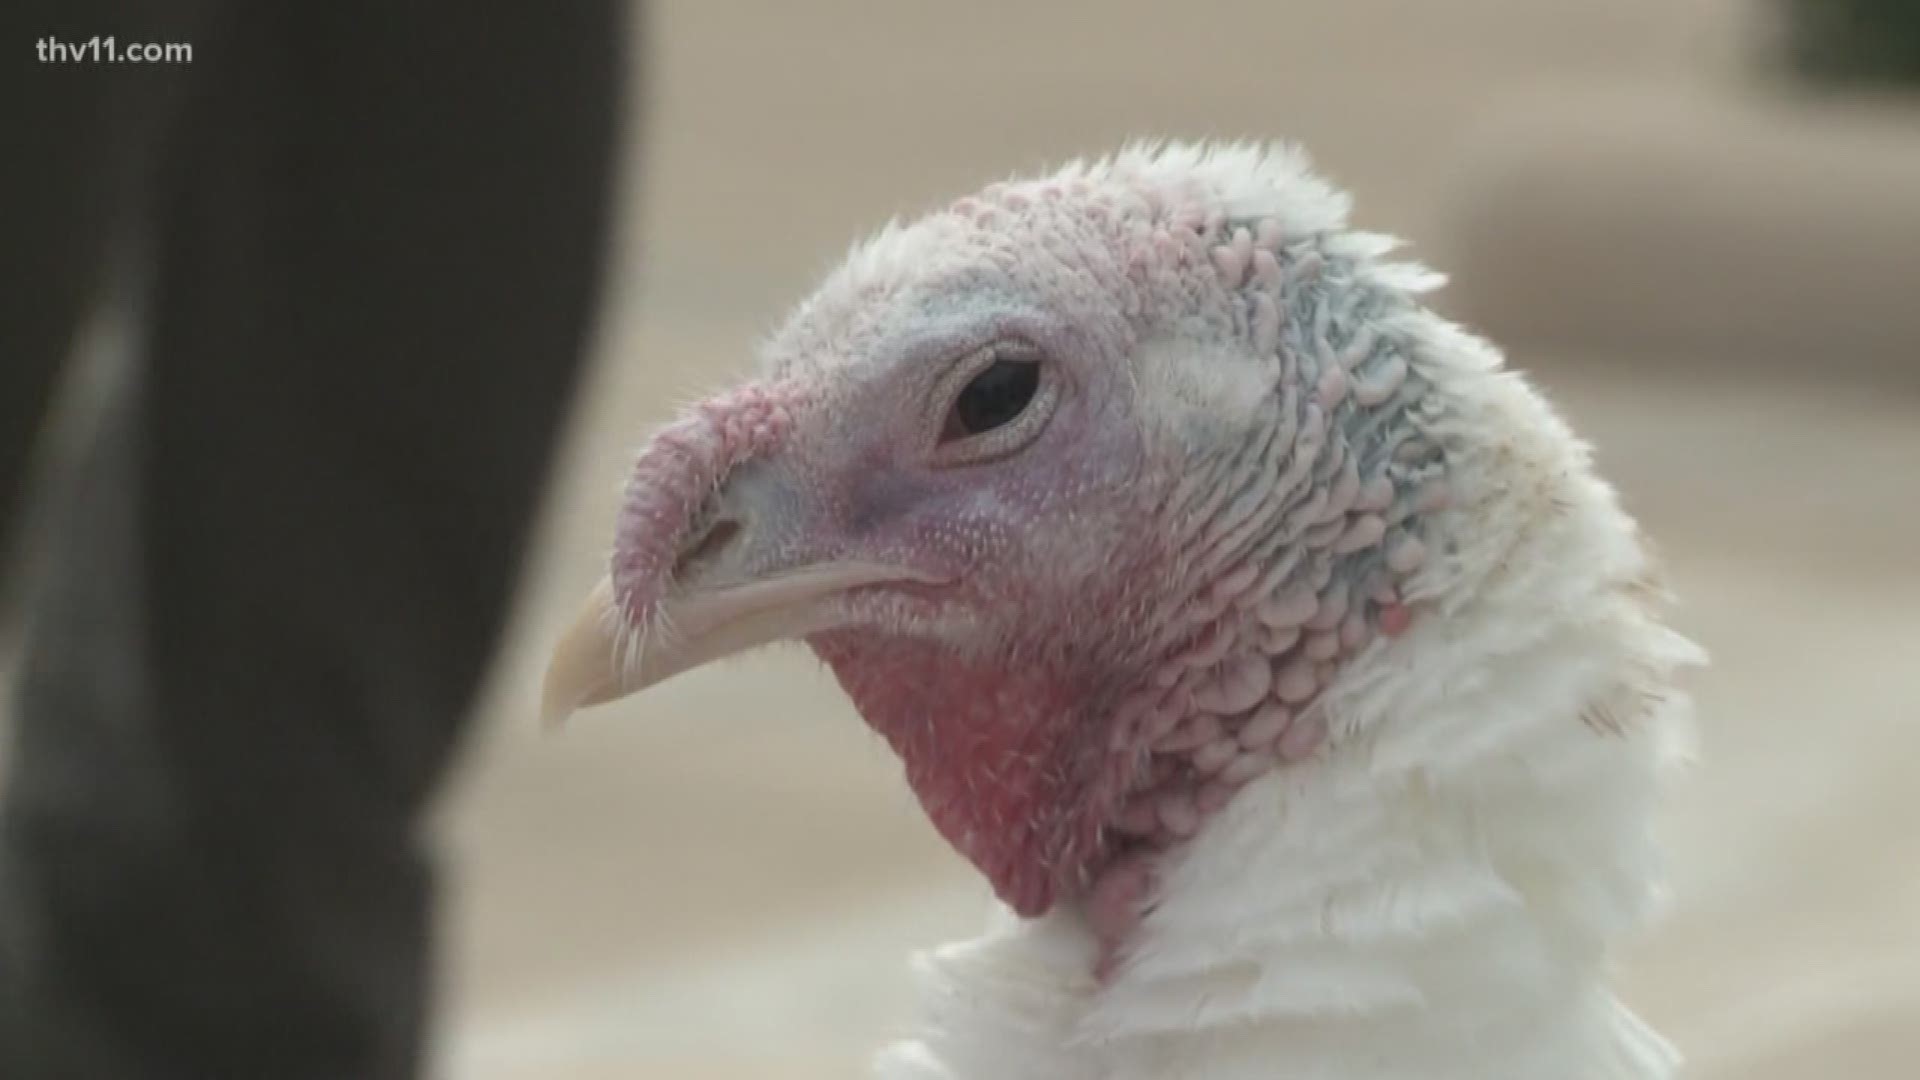 Turkeys across Arkansas may be worried ahead of thanksgiving dinner-- but not this turkey.